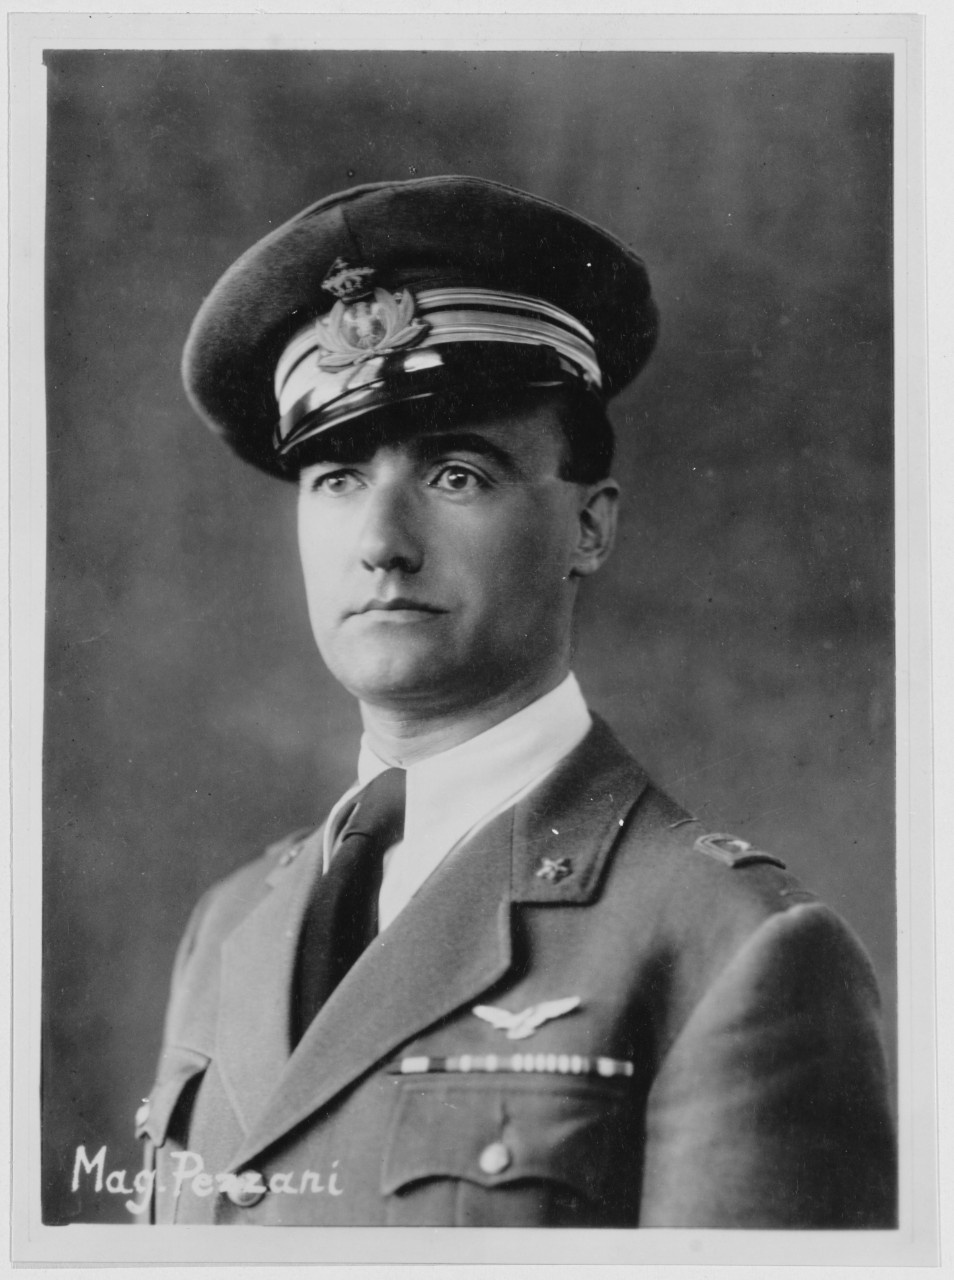 Major Pezzani, Italian Aviators who flew Savoia-Machetti Seaplanes Trans-Atlantic, 1933